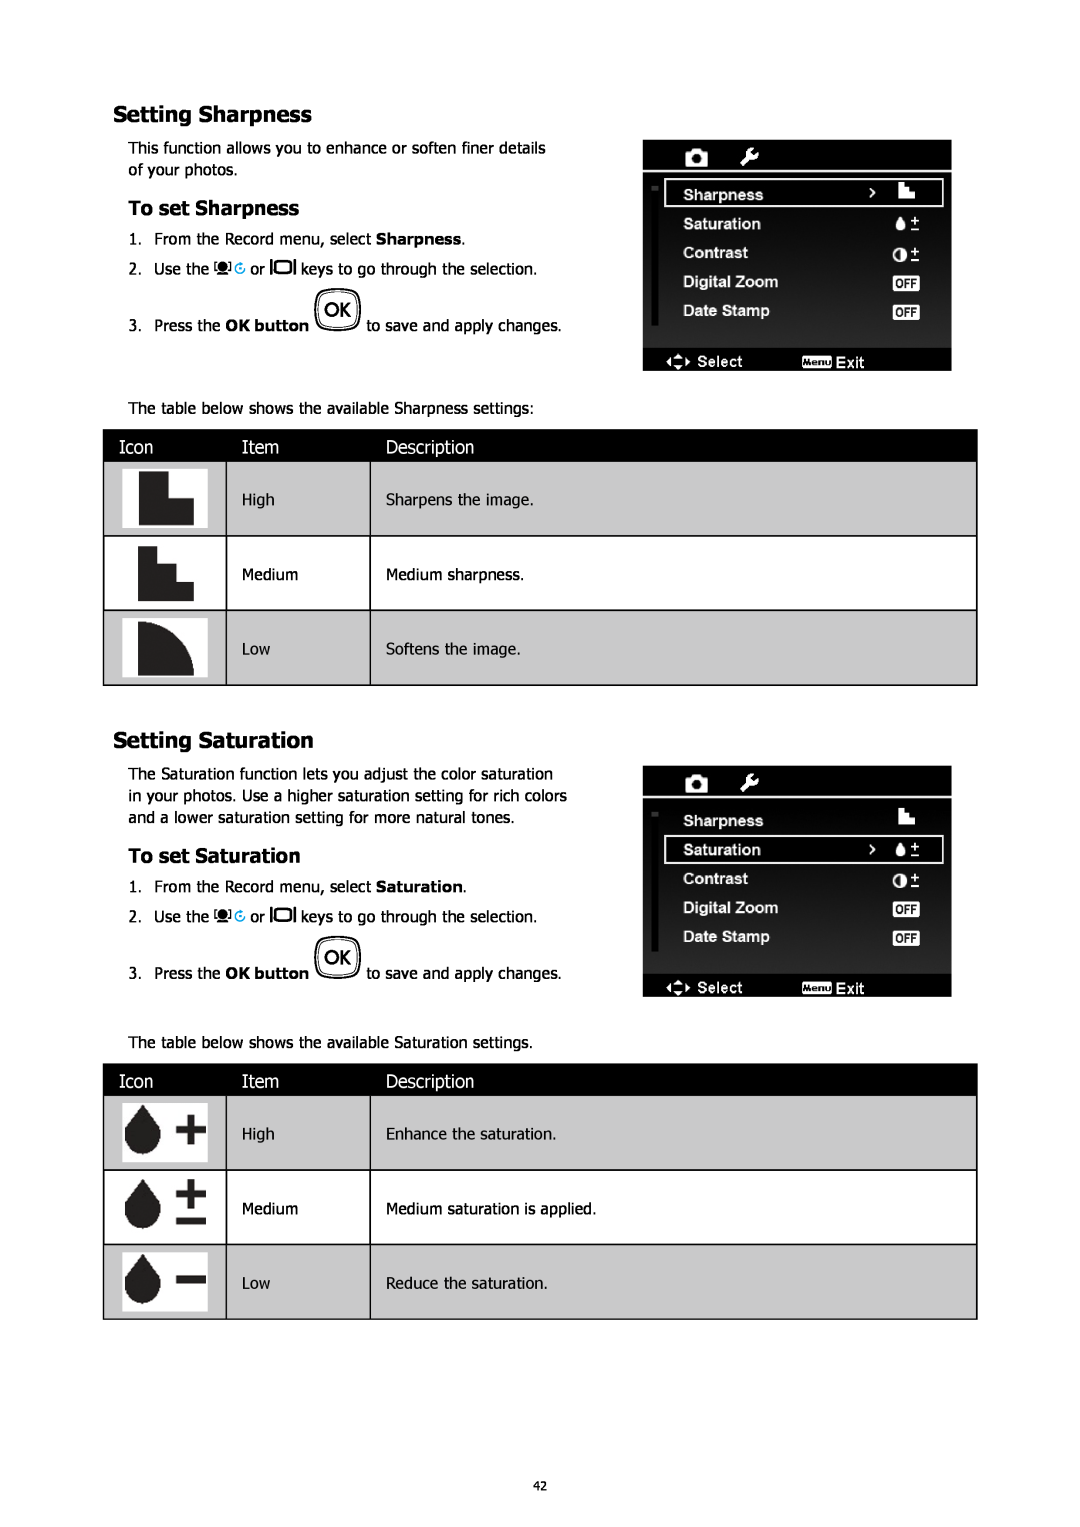 HP SW450 manual Setting Sharpness, Setting Saturation, To set Sharpness, To set Saturation, Icon, Description 